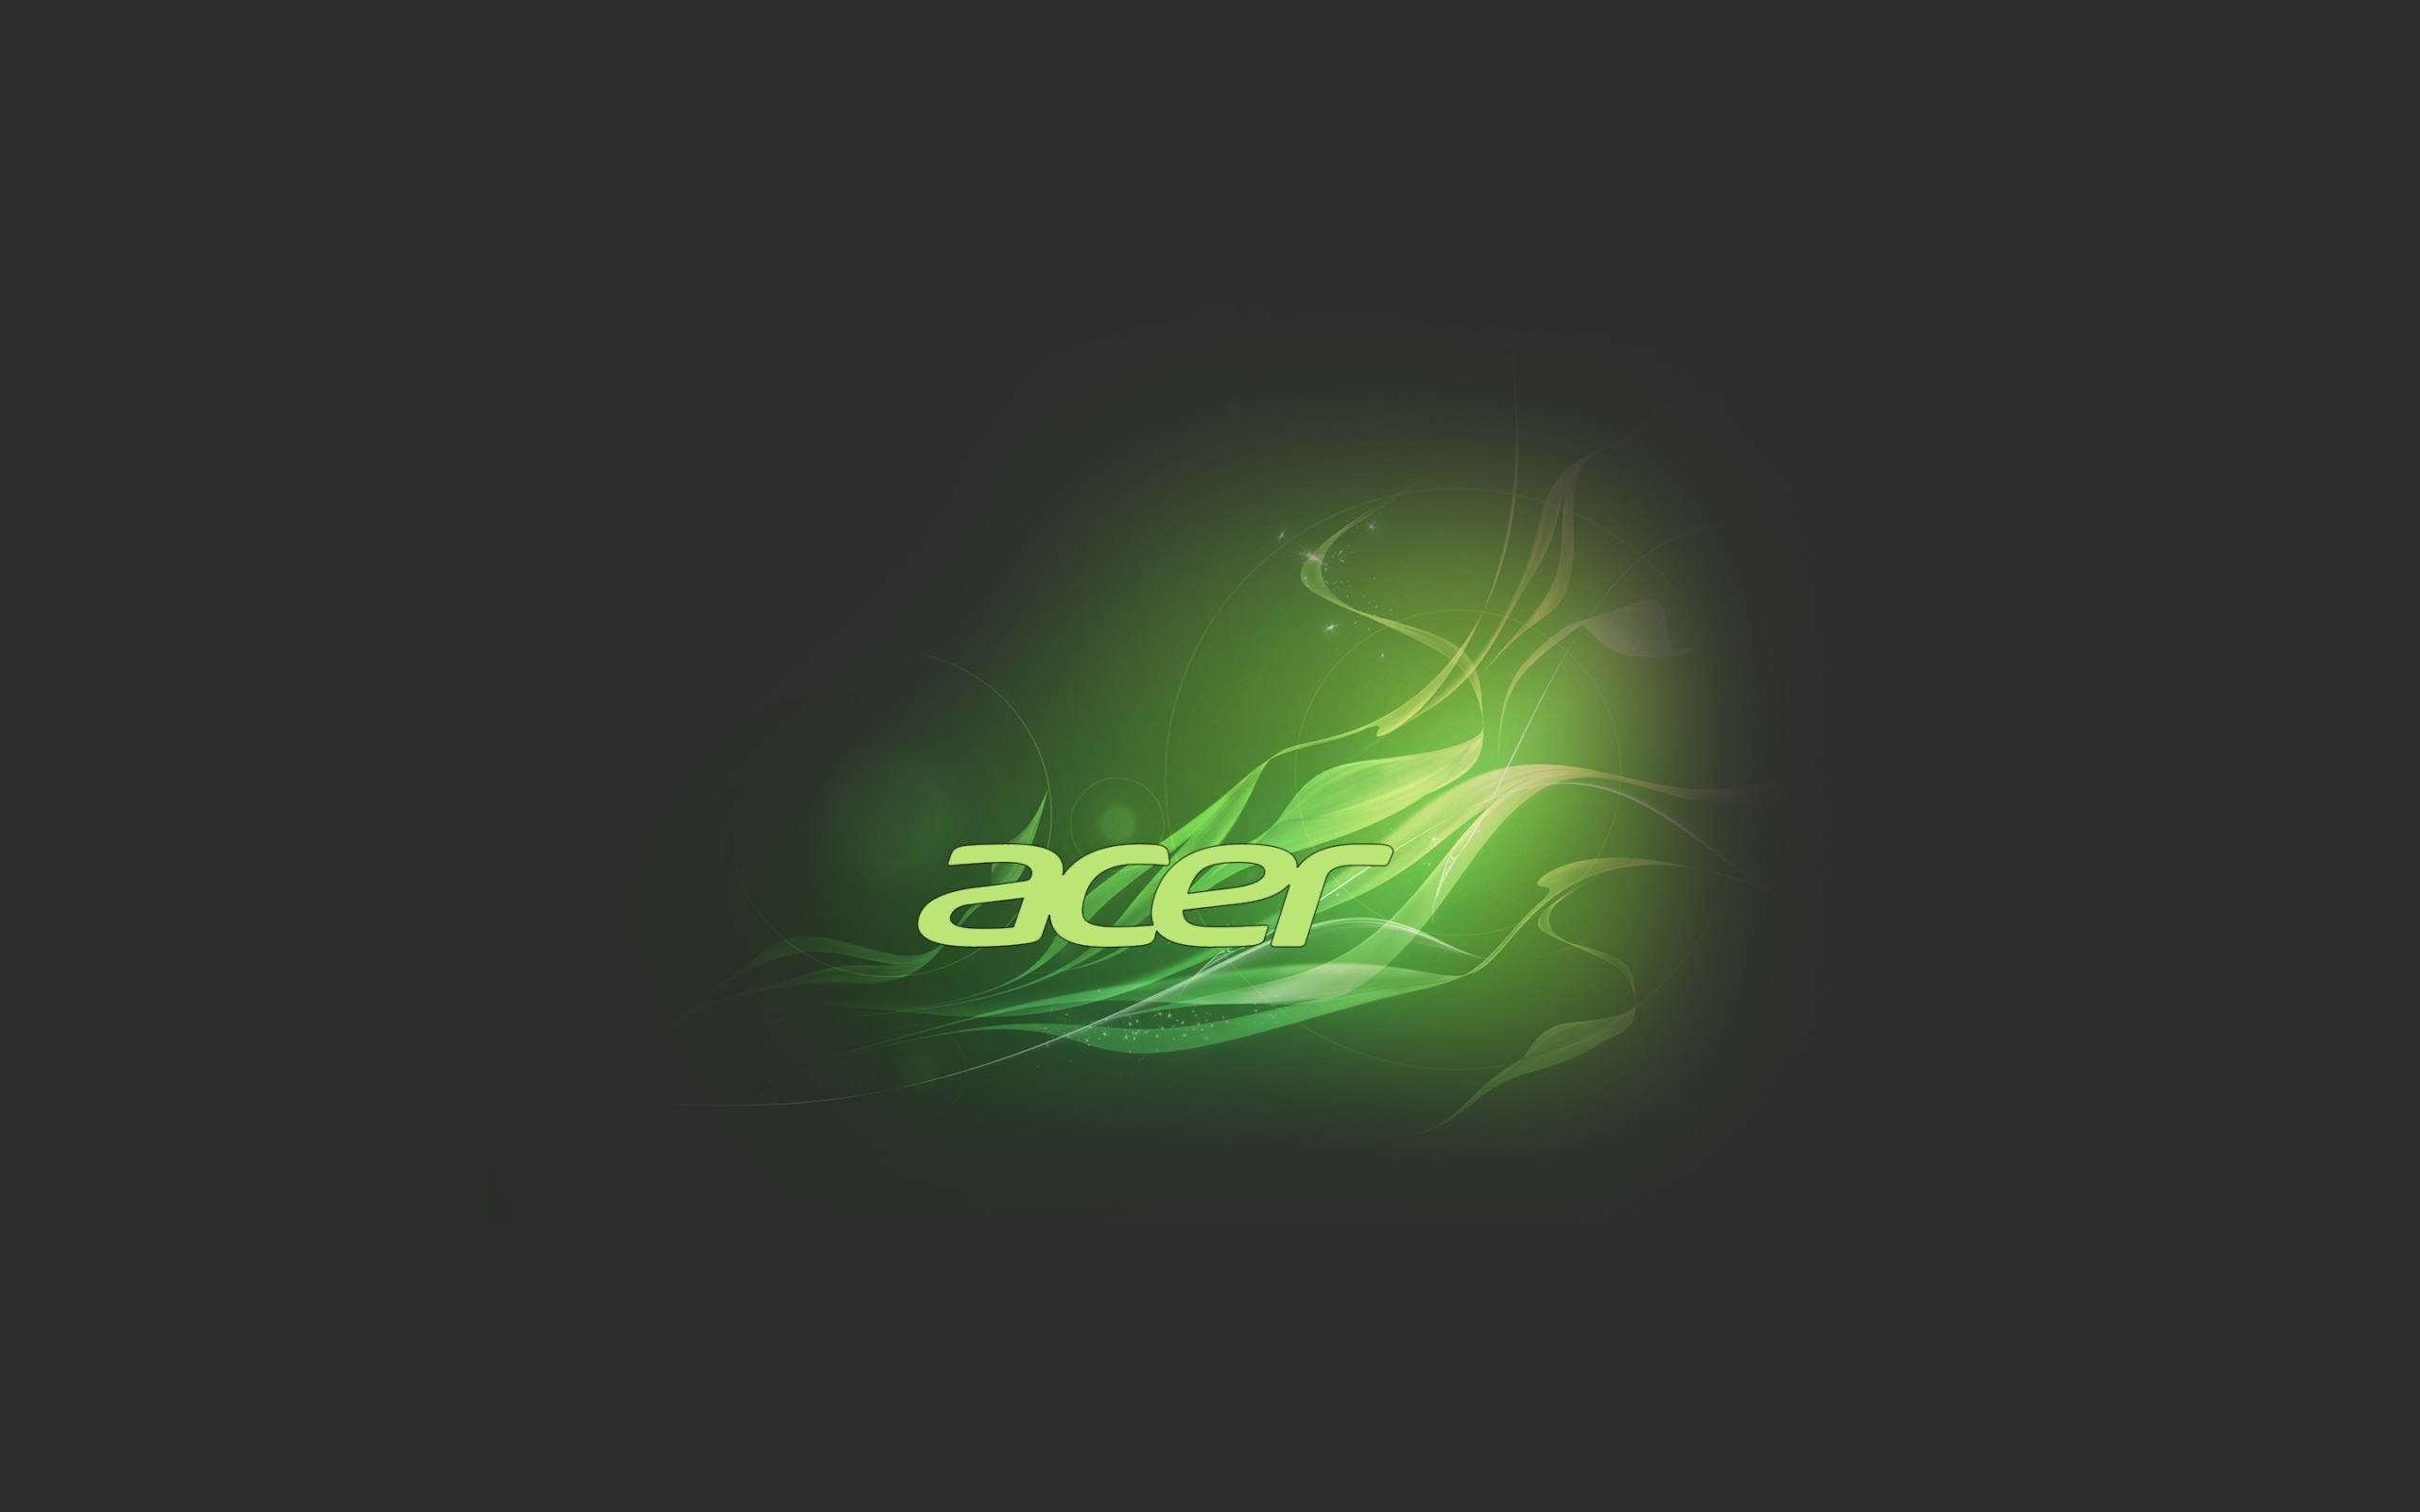 Acer Puter Wallpaper Desktop Background Id